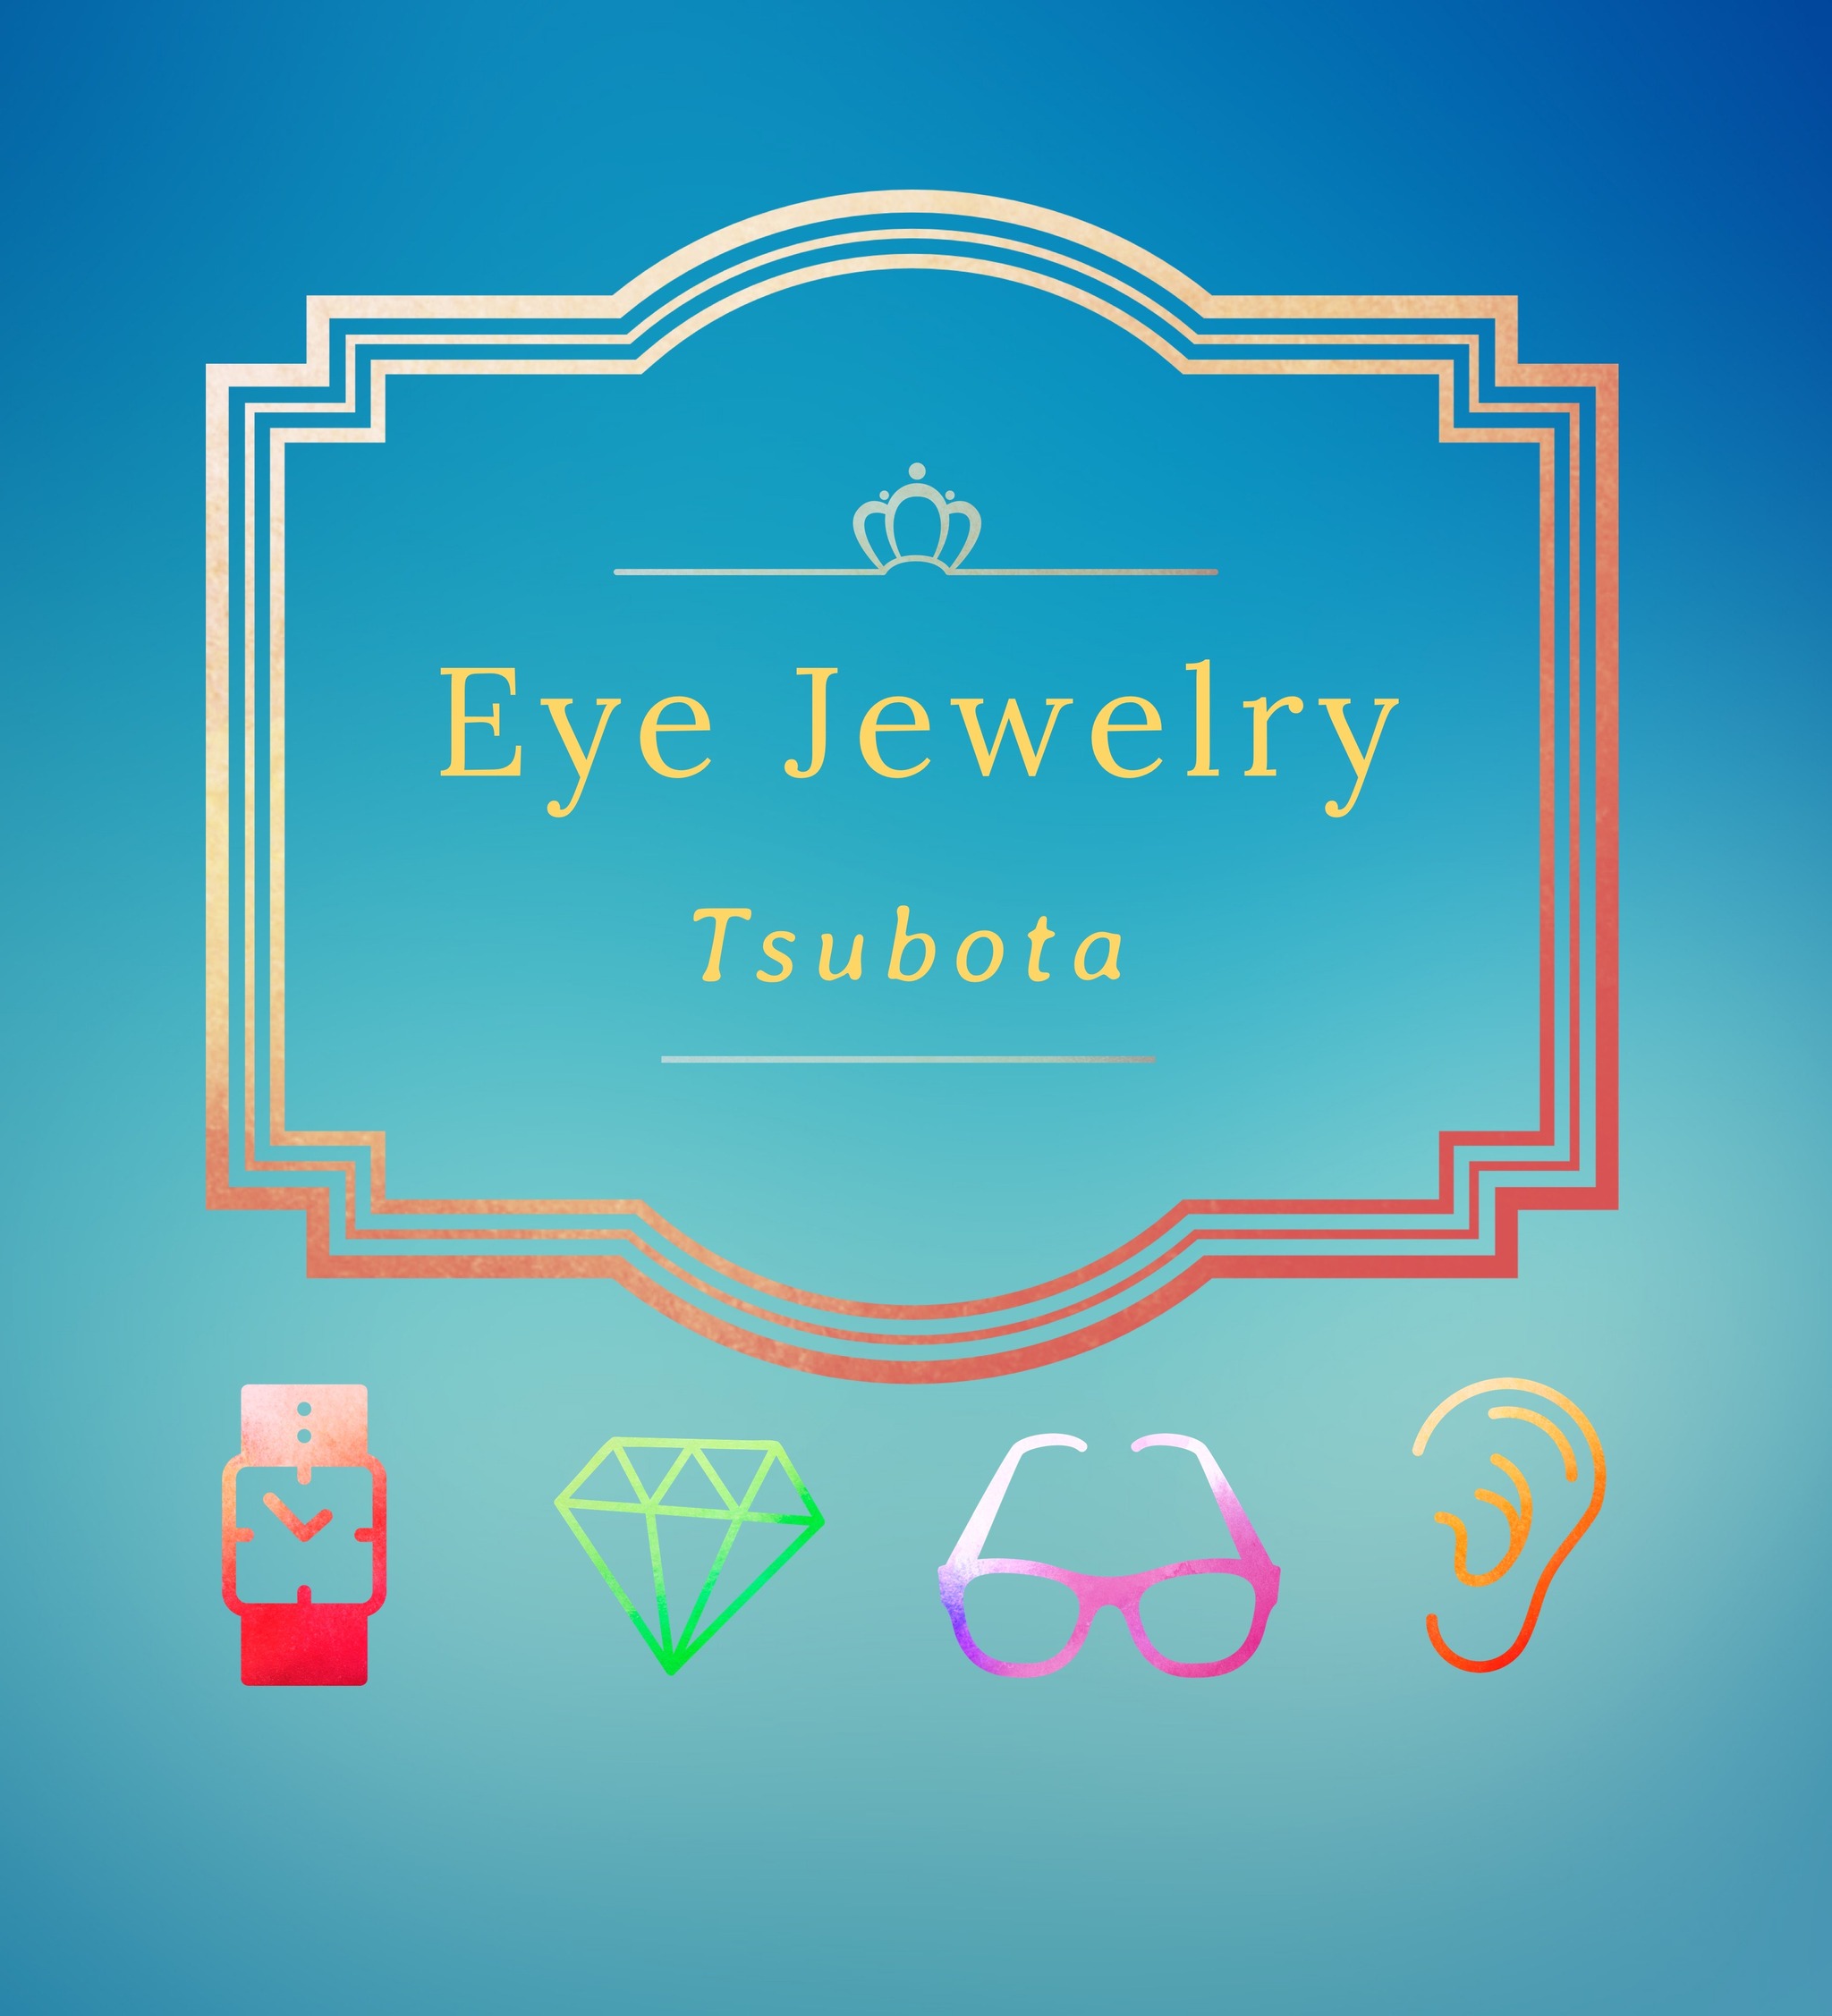 Eye Jewelry Tsubota